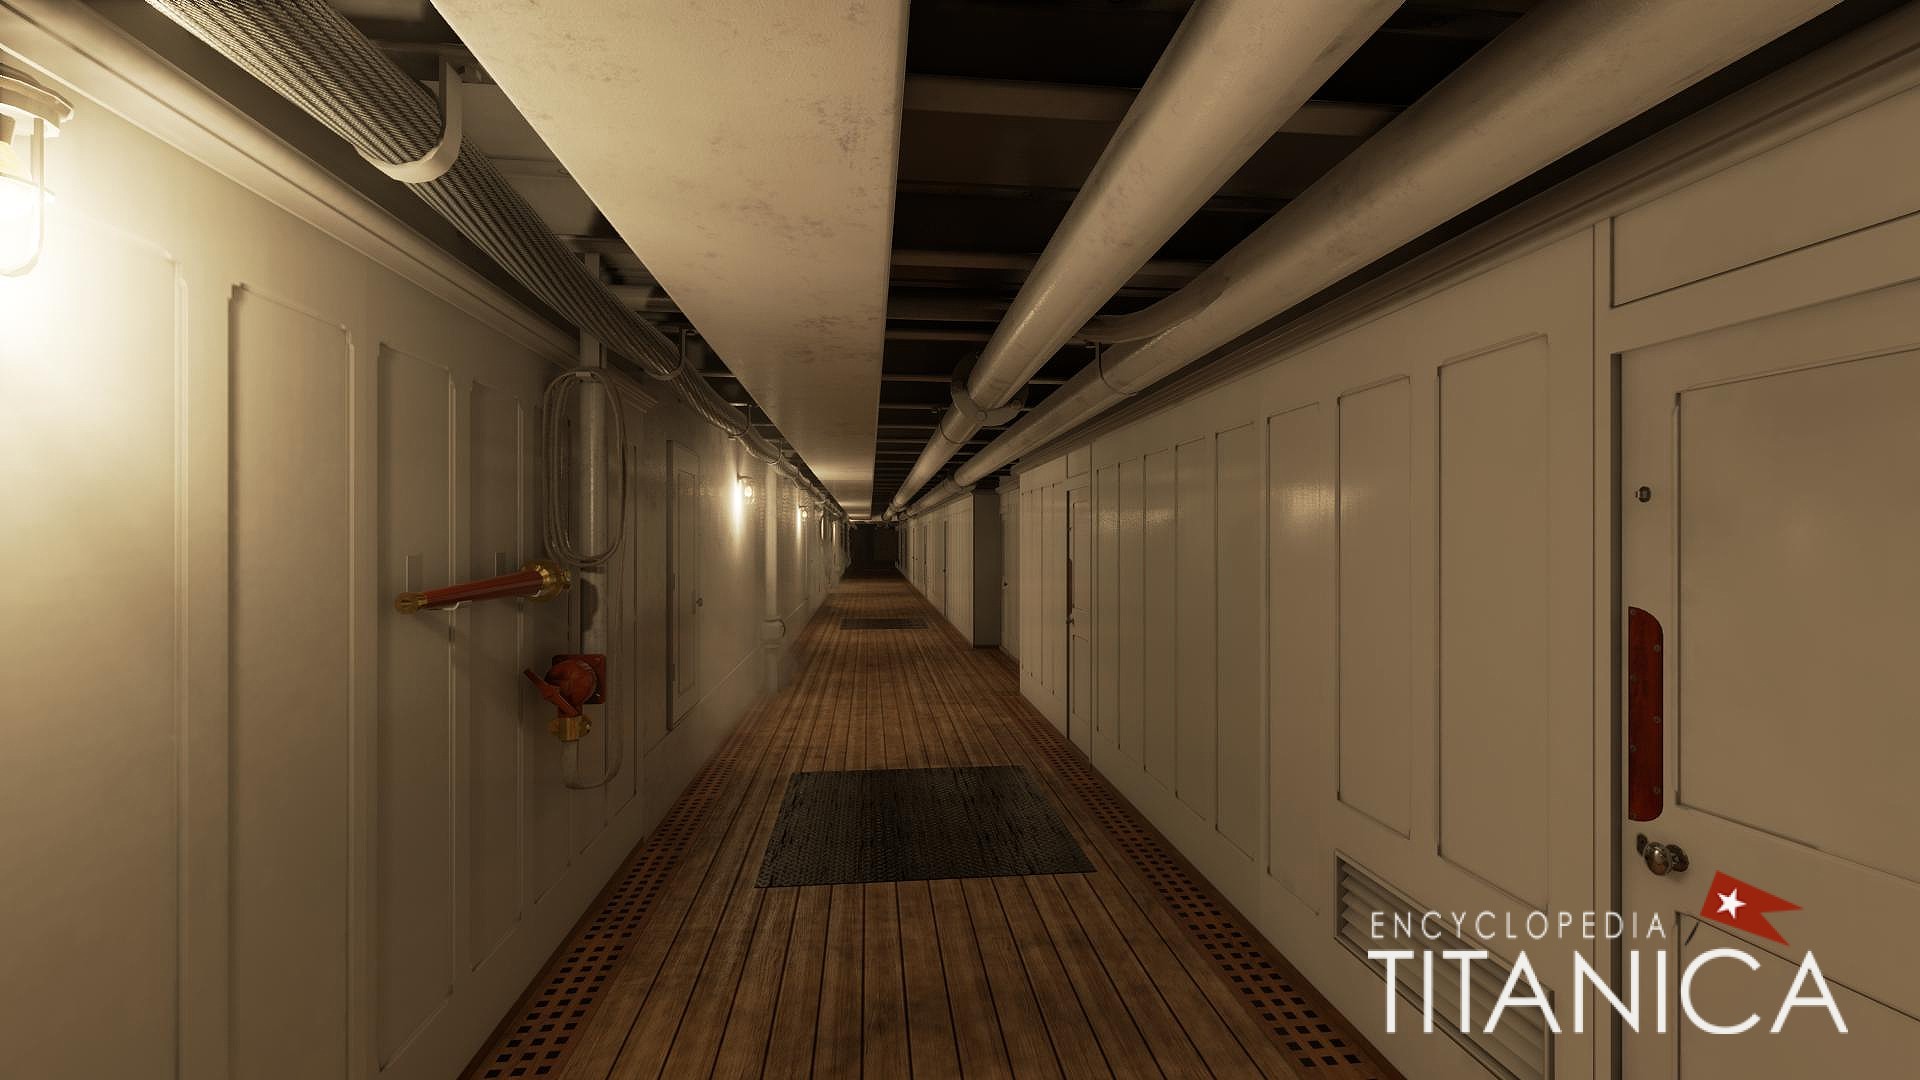 Titanic E-Deck Scotland Road  | Encyclopedia Titanica